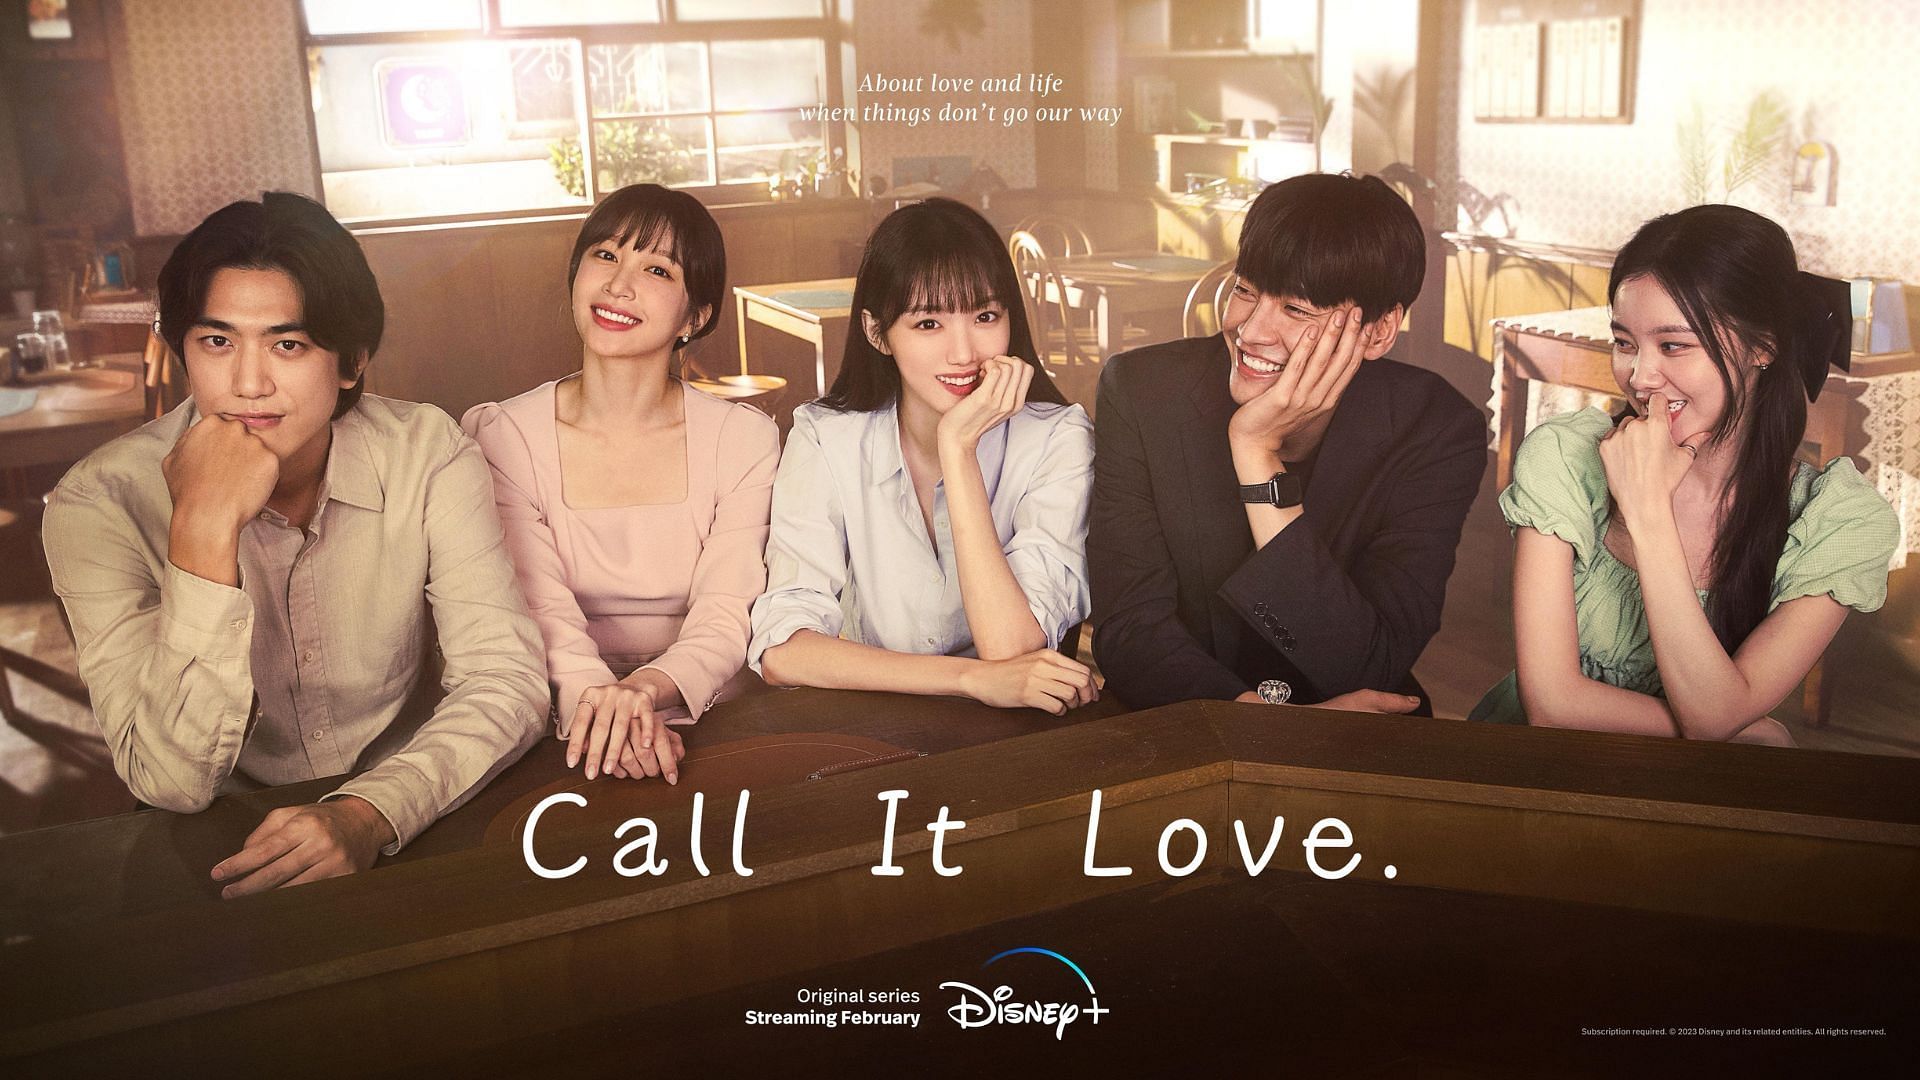 Call It Love (image via Disney+)